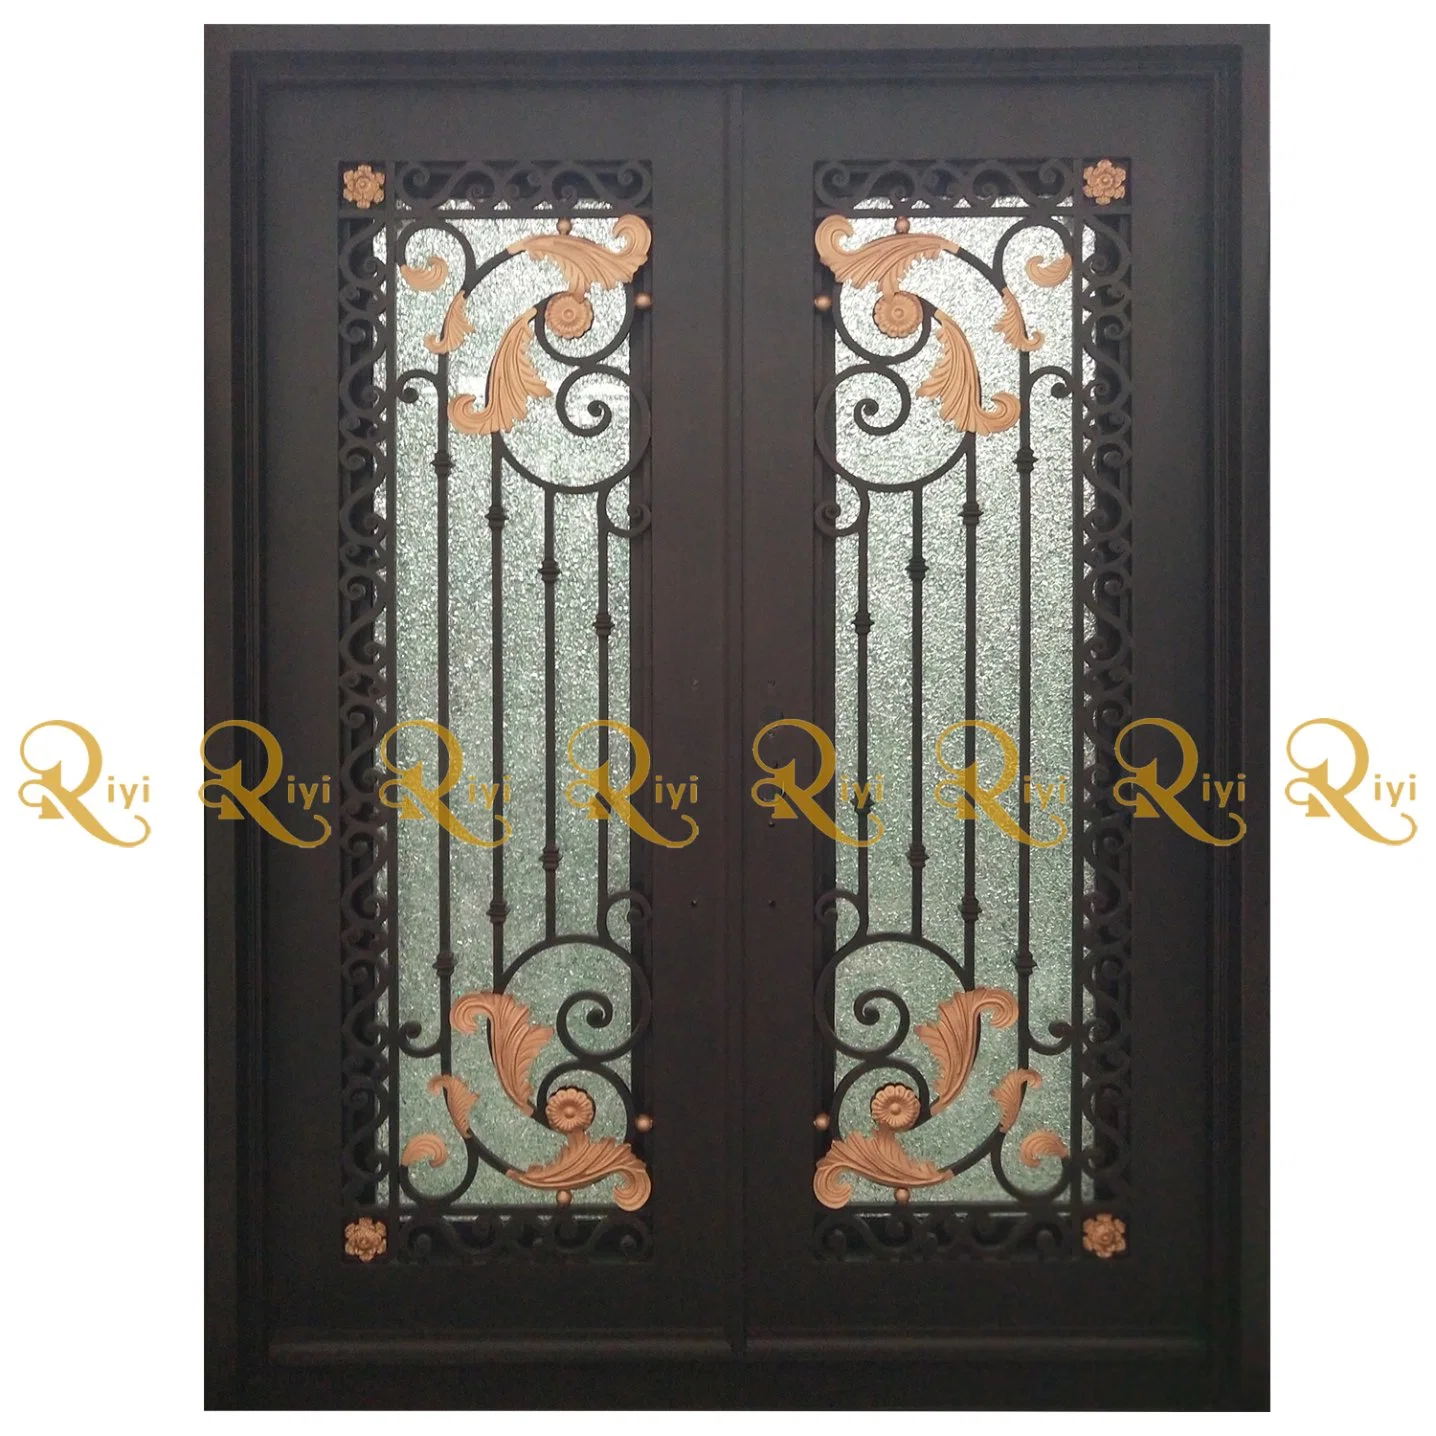 European Standard Double Panels Swing Style Wrought Iron Entrance Security Steel Door